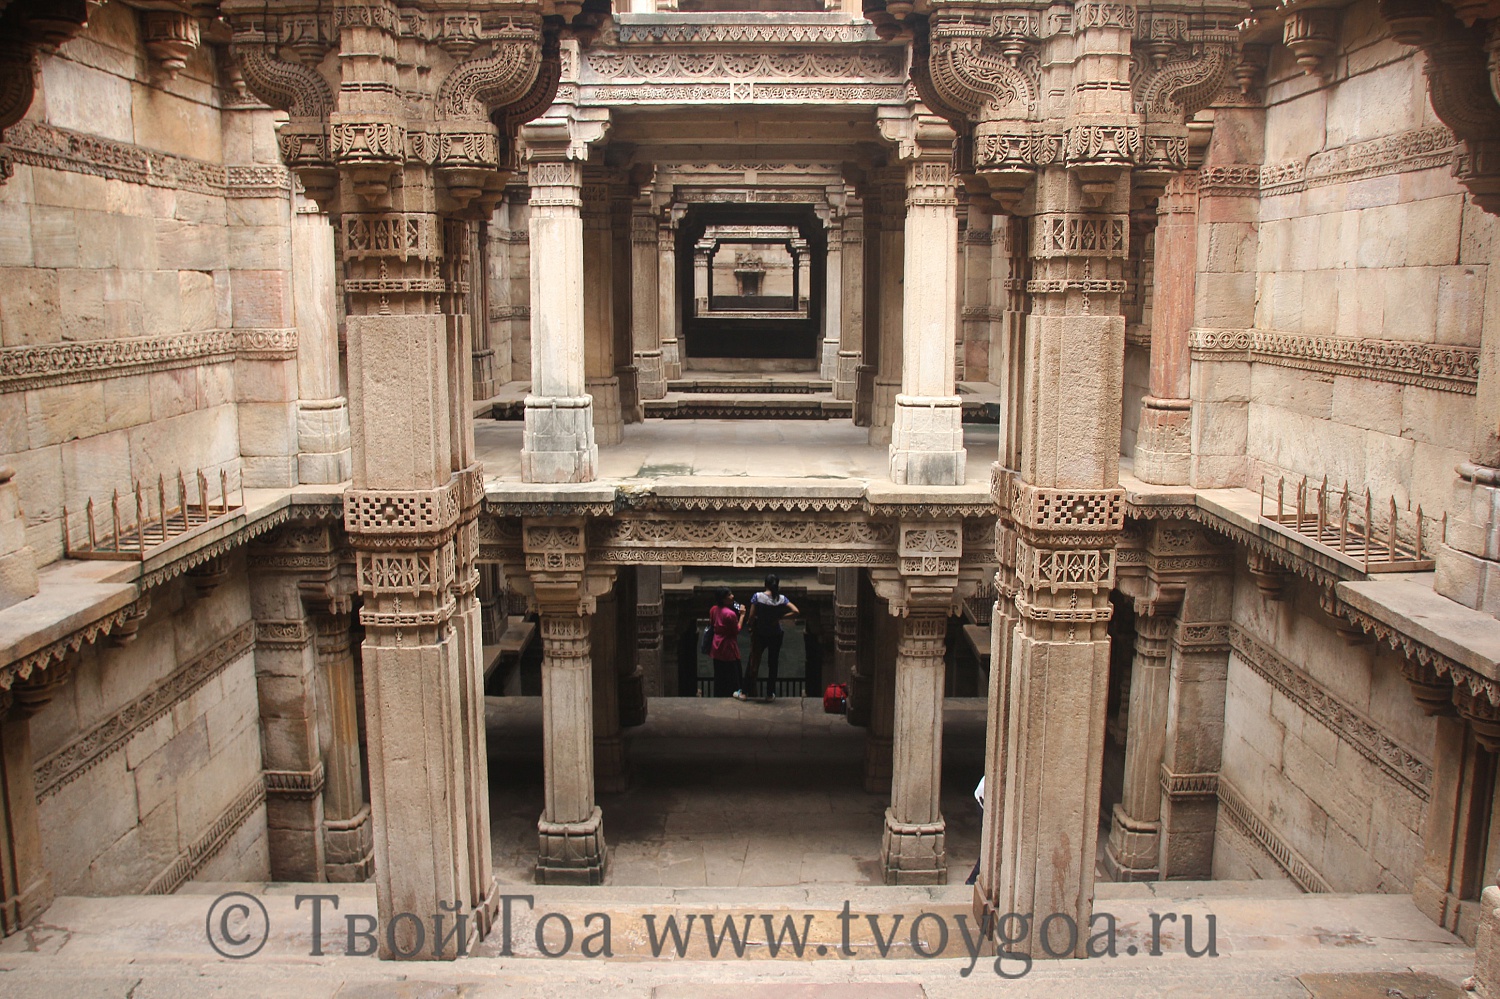 Адаладж вав (Adalaj vav) - удивительный колодец-дворец